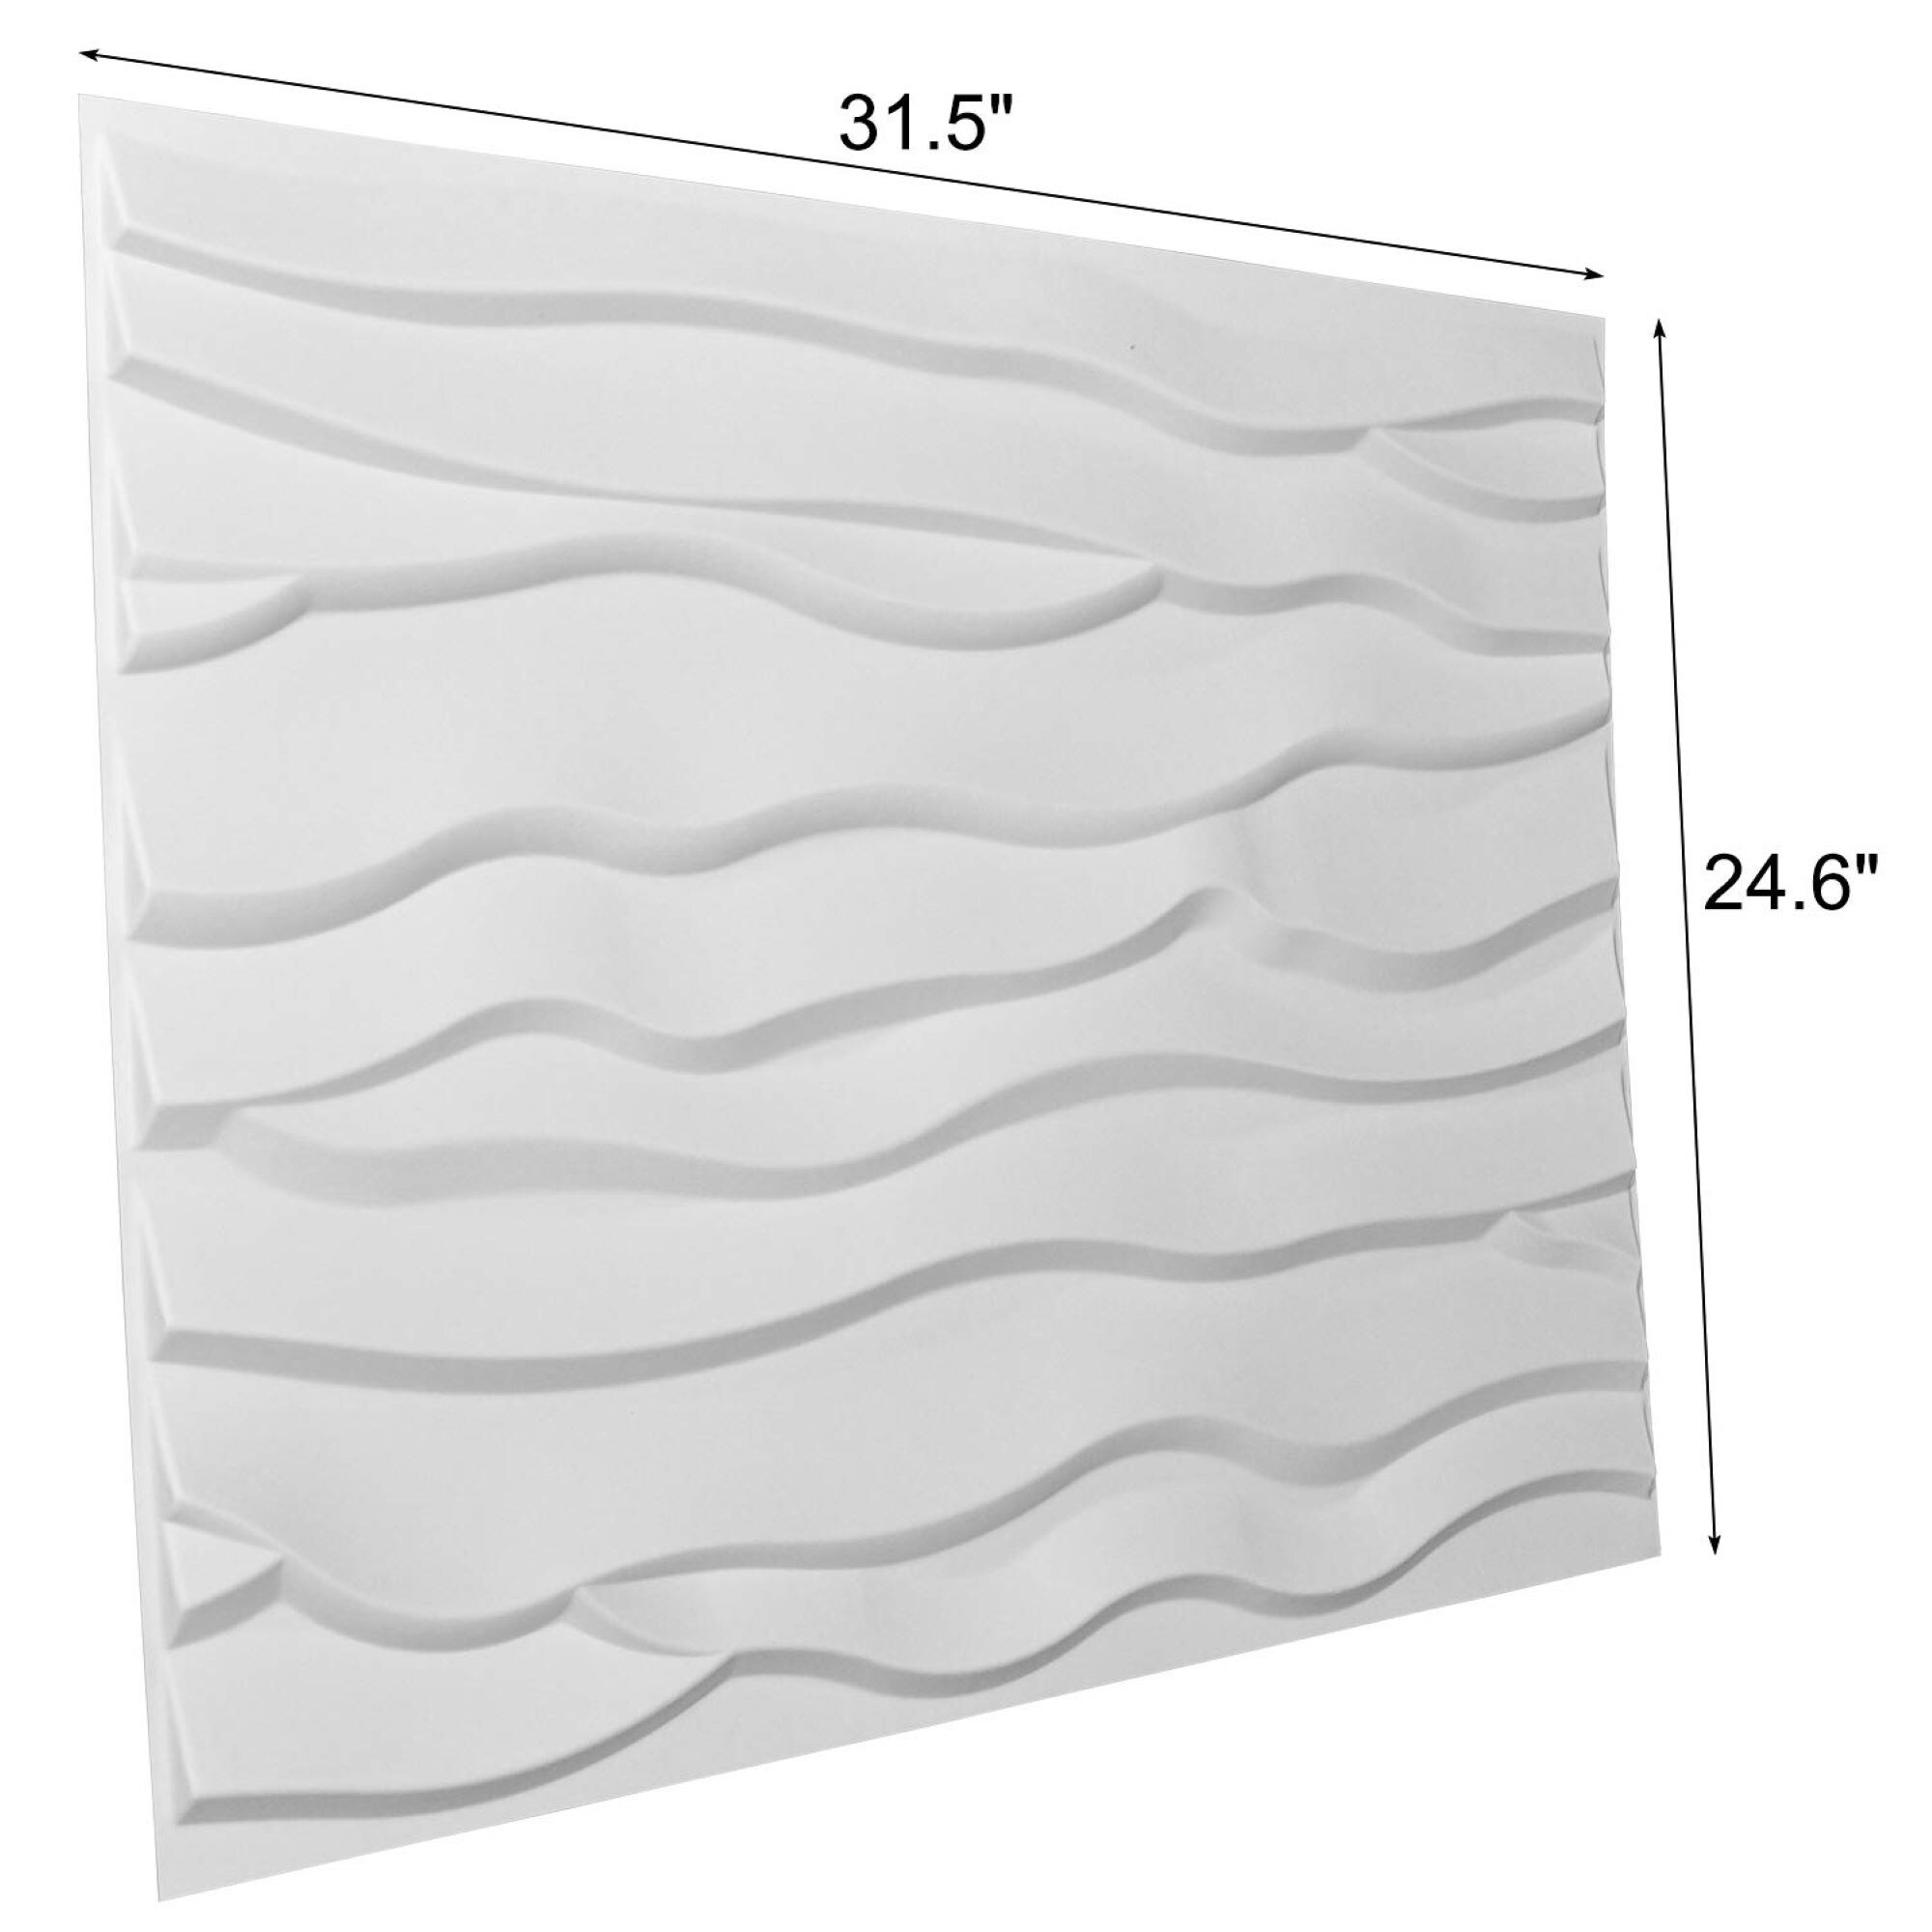 Art3d 3D Wall Panels for Interior Wall Decoration Brick Design Pack of 6  Tiles 32 Sq Ft (Plant Fiber)